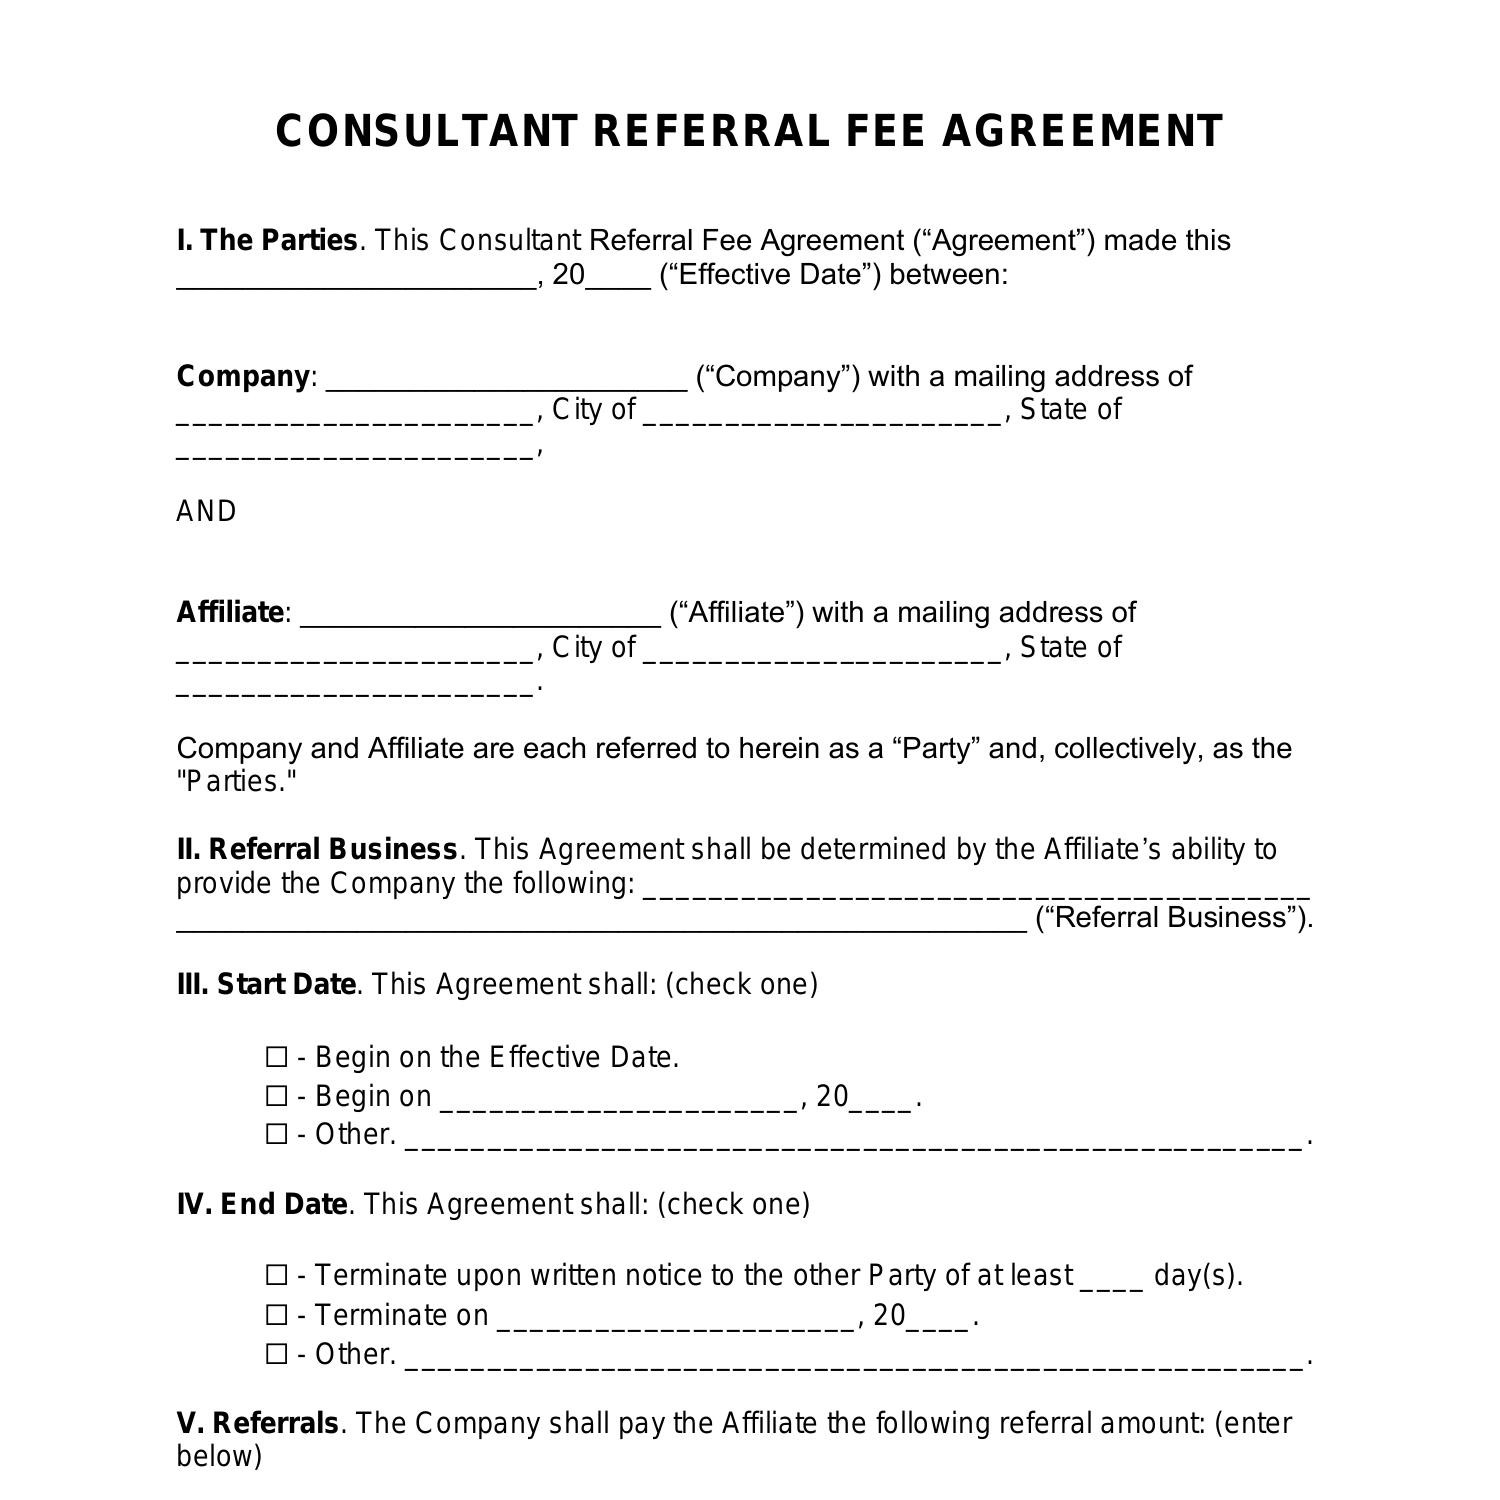 ConsultantReferralFeeAgreement.pdf DocDroid